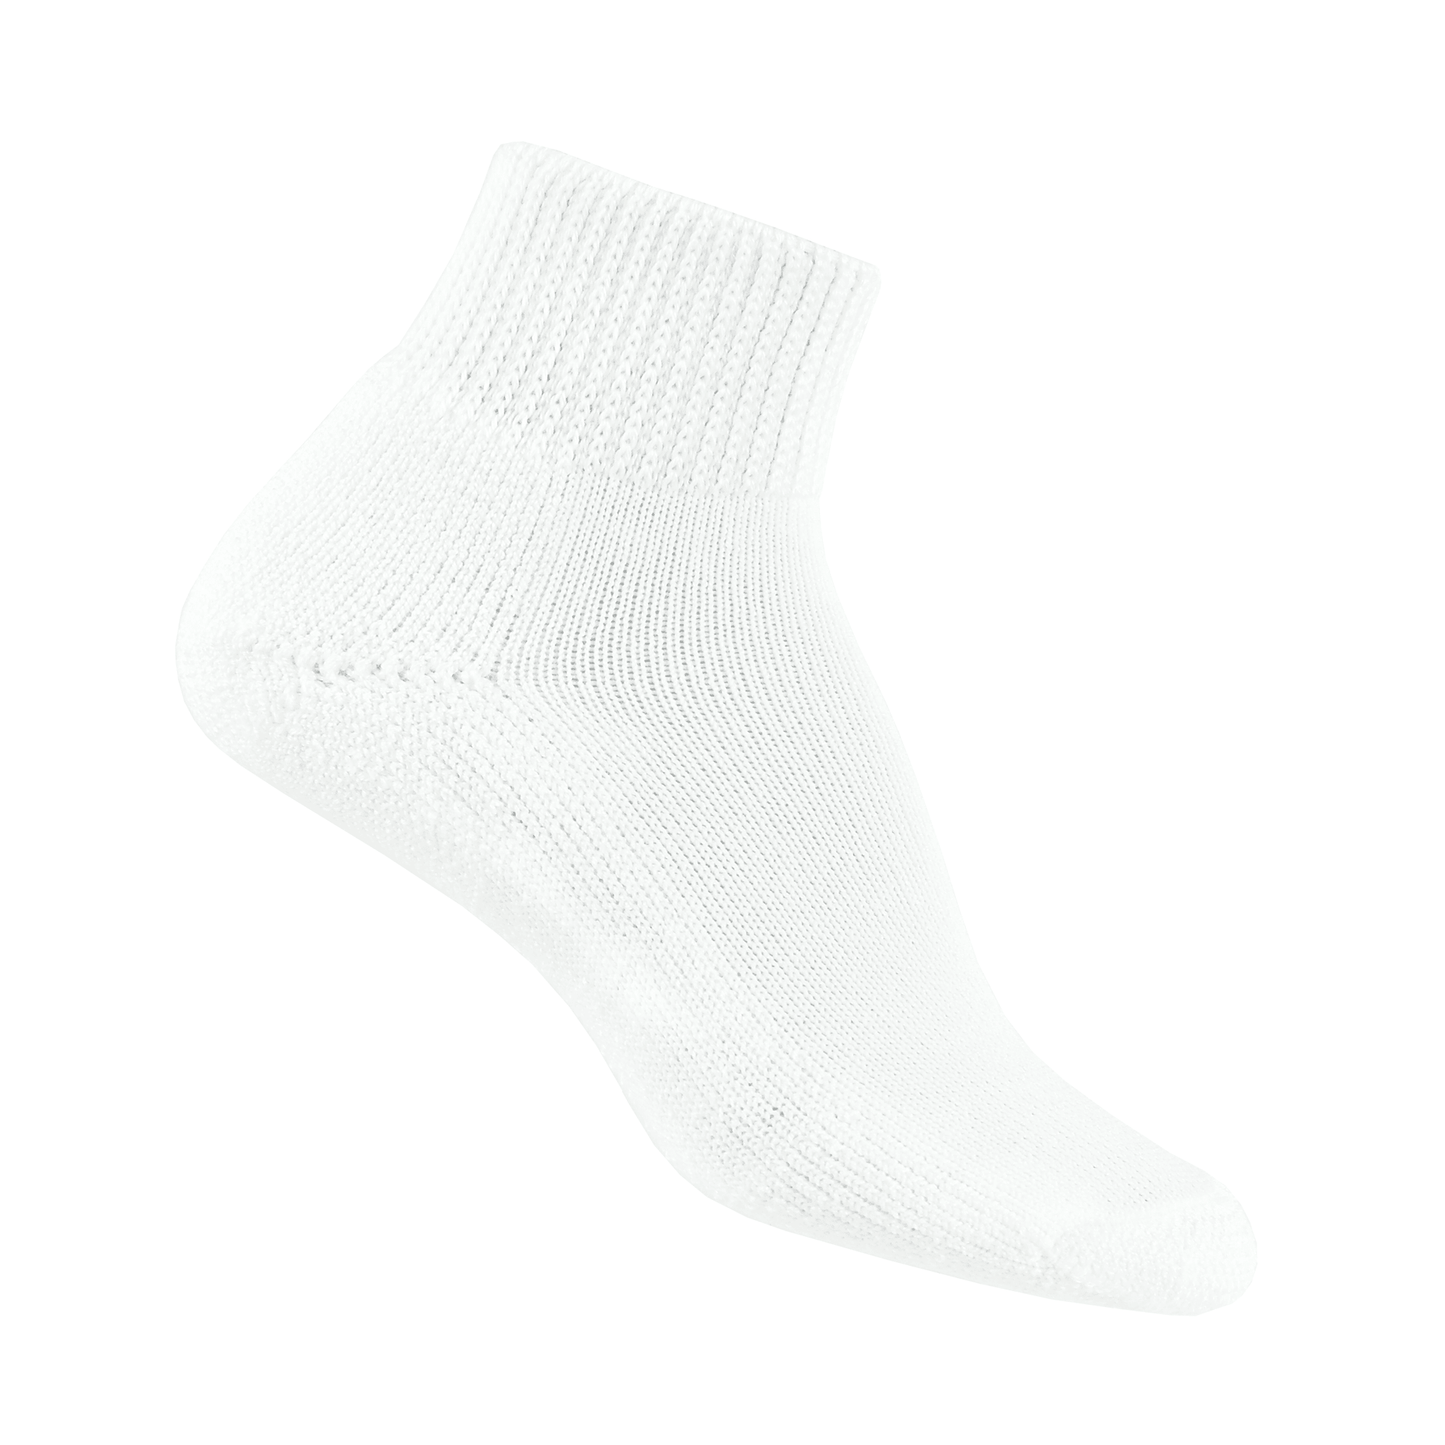 Thorlos Women's Ankle Advanced Diabetic Socks in White